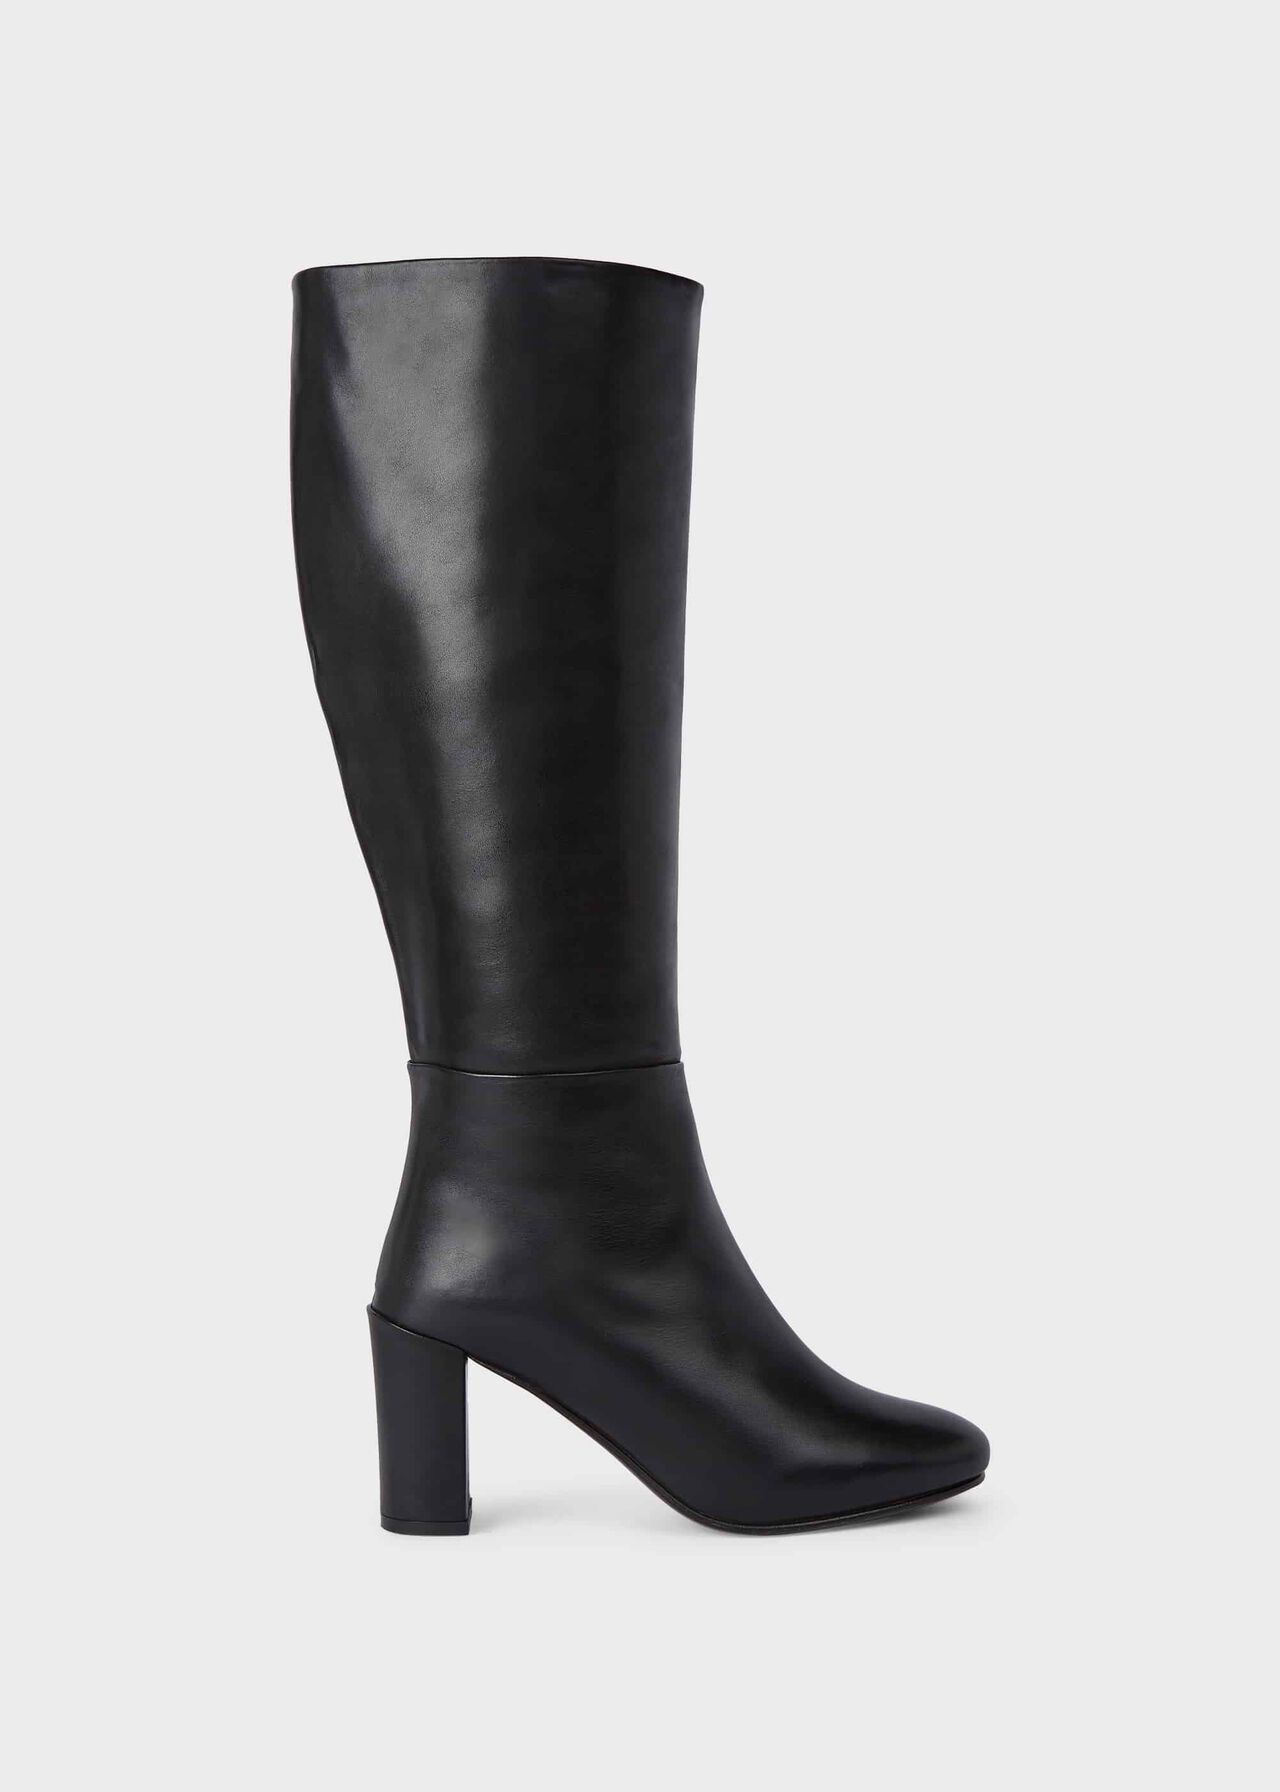 Anastasia Leather Knee High Boots, Black, hi-res